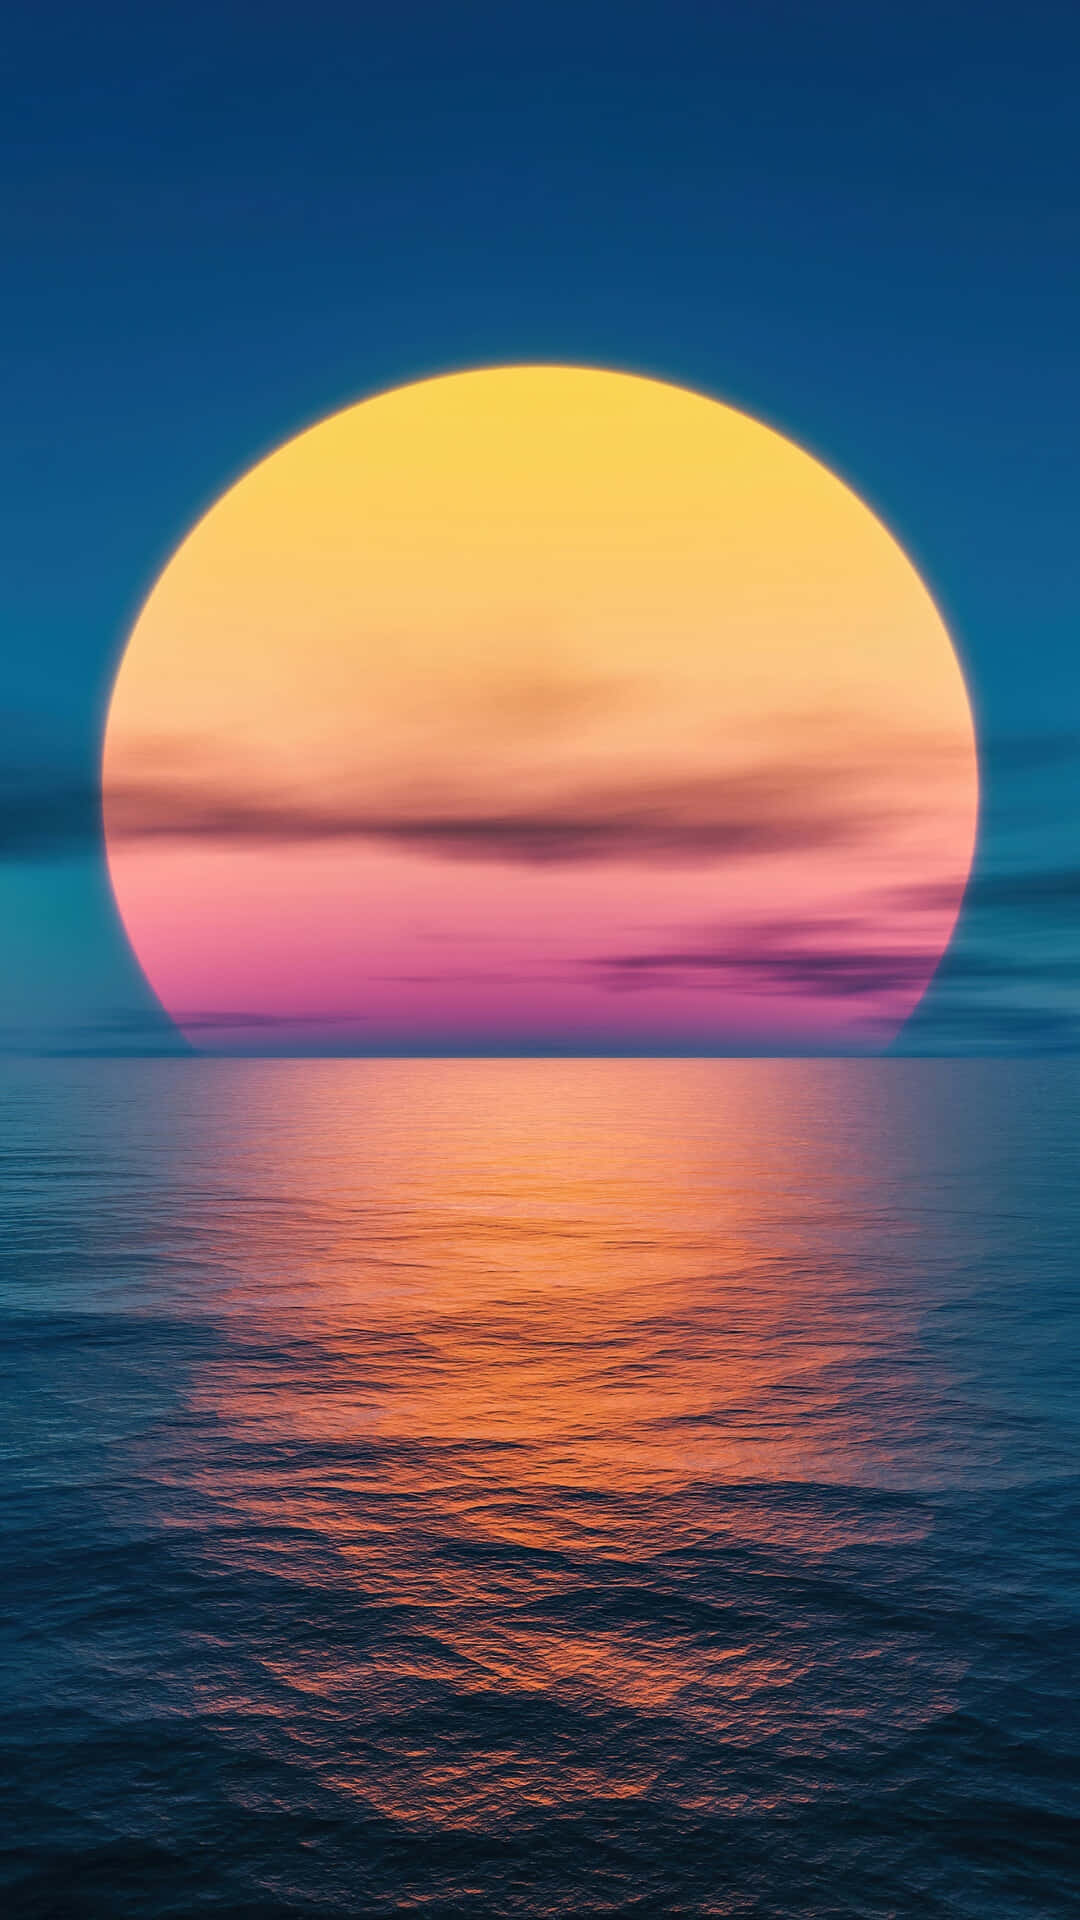 Mesmerizing Sunset On The Ocean